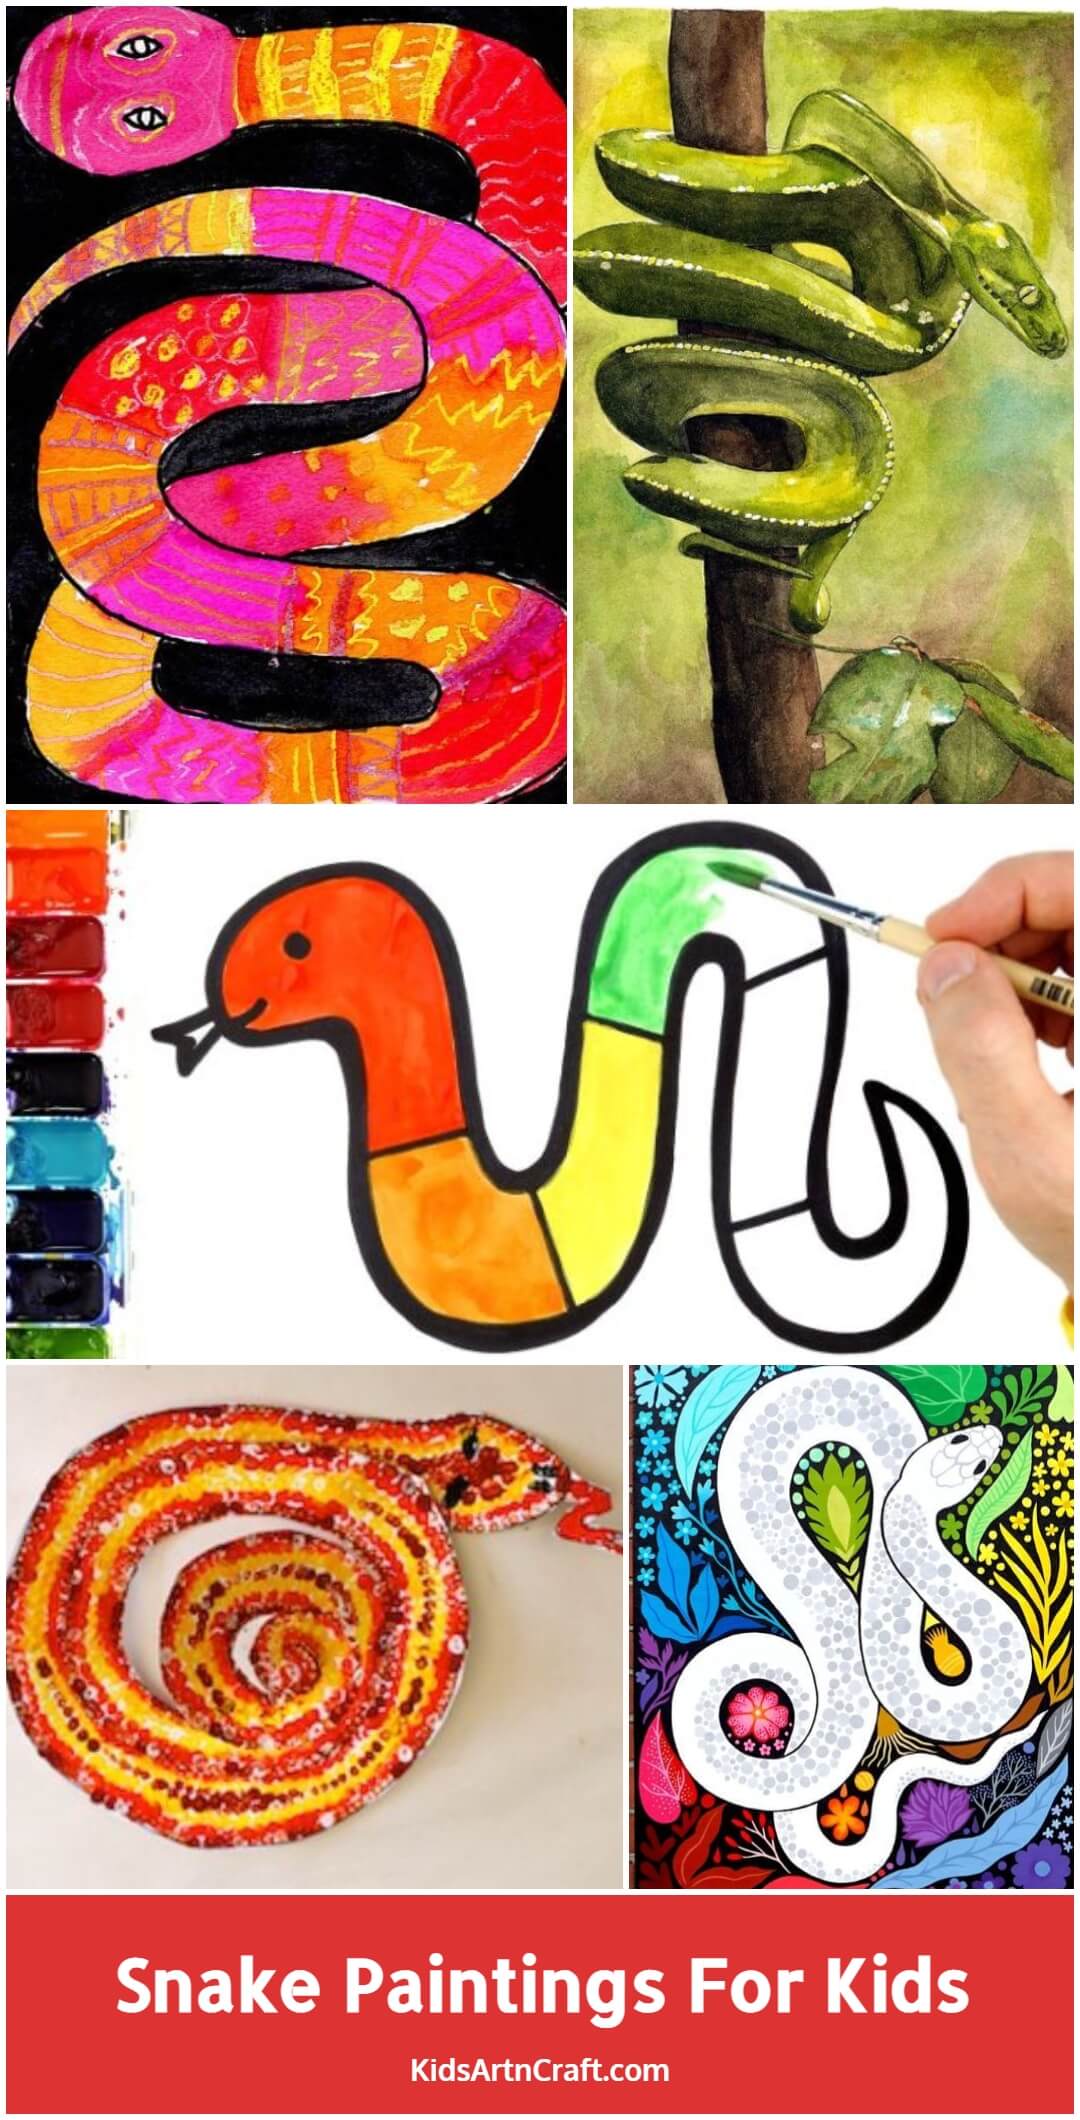 Snake Paintings for Kids